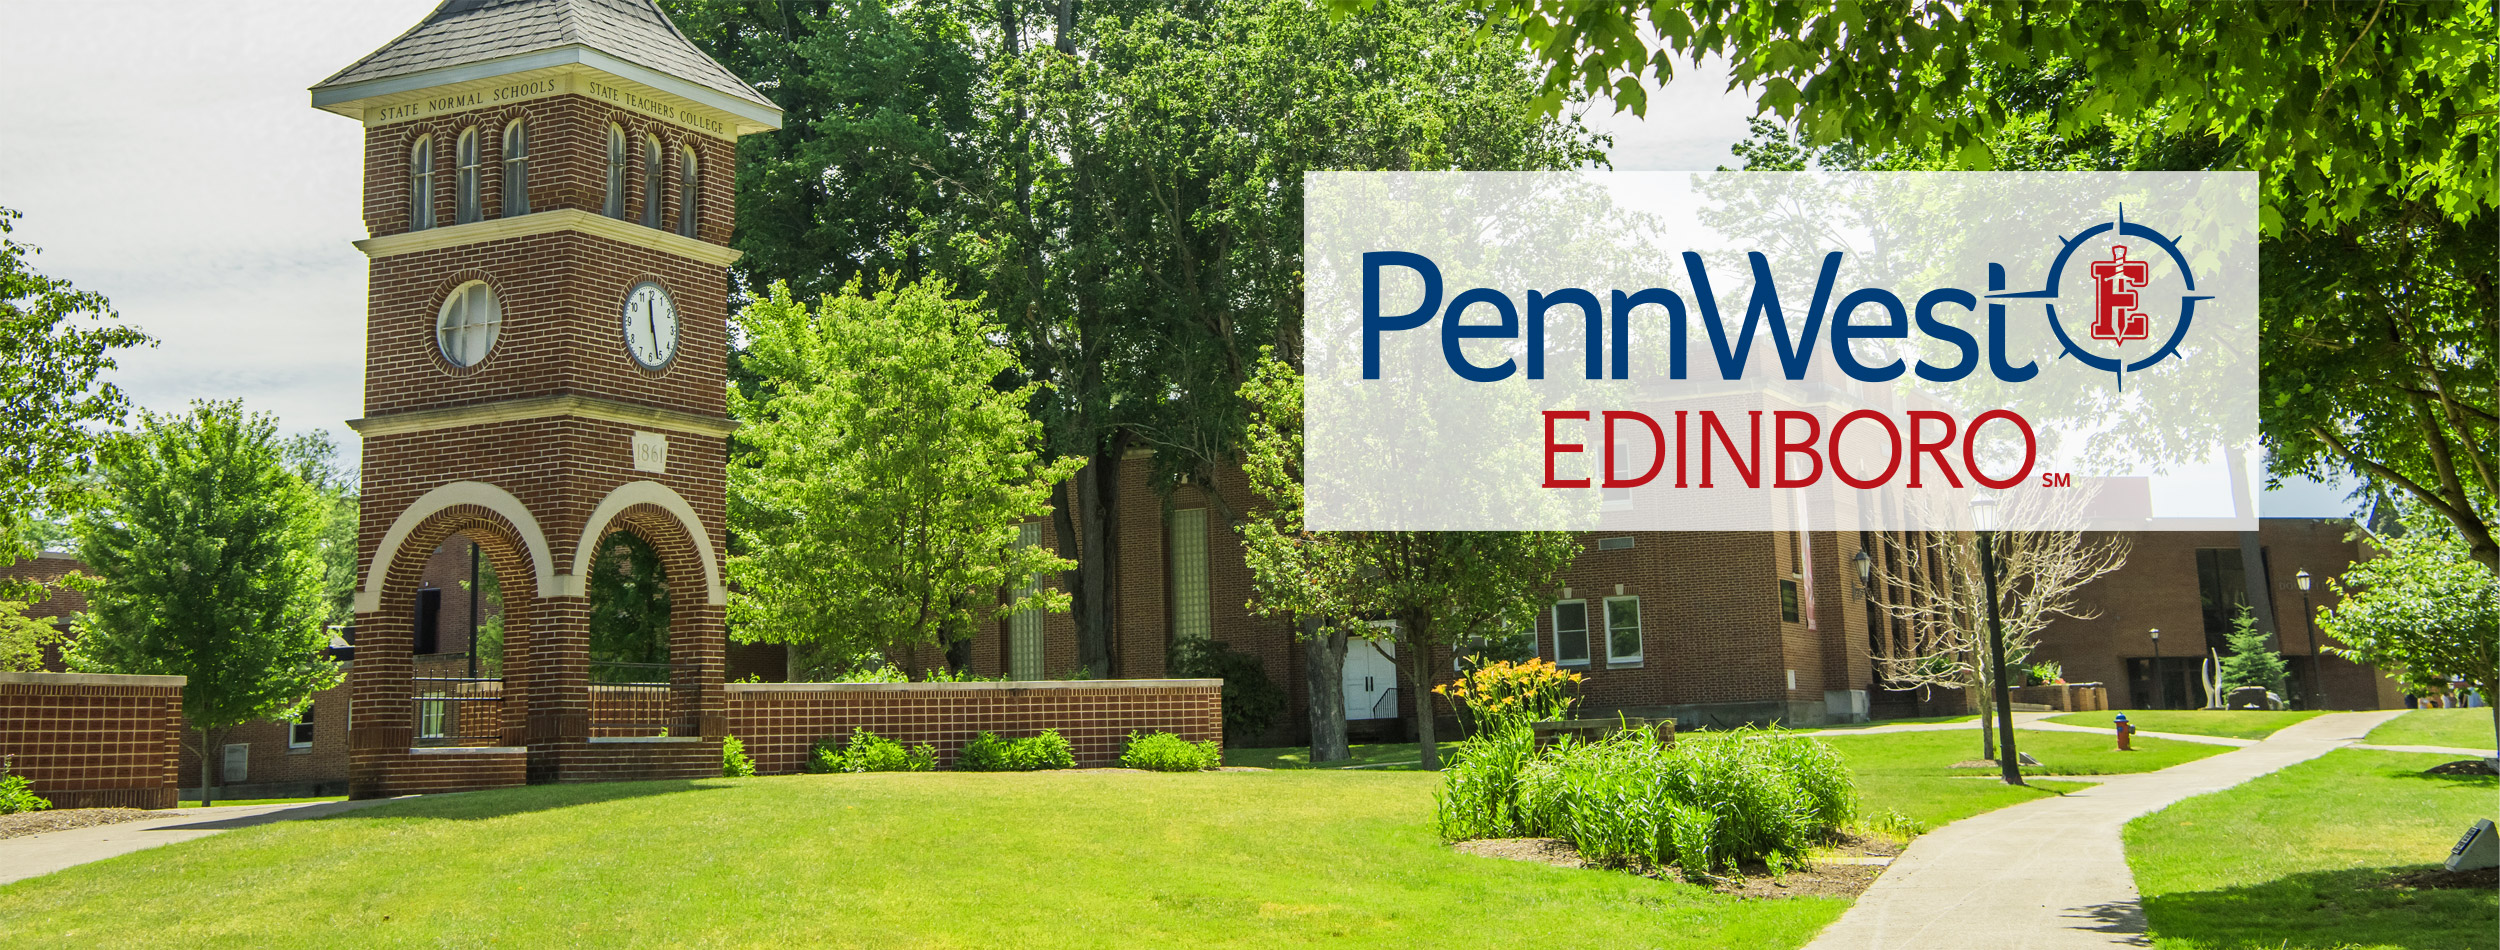 PennWest Edinboro